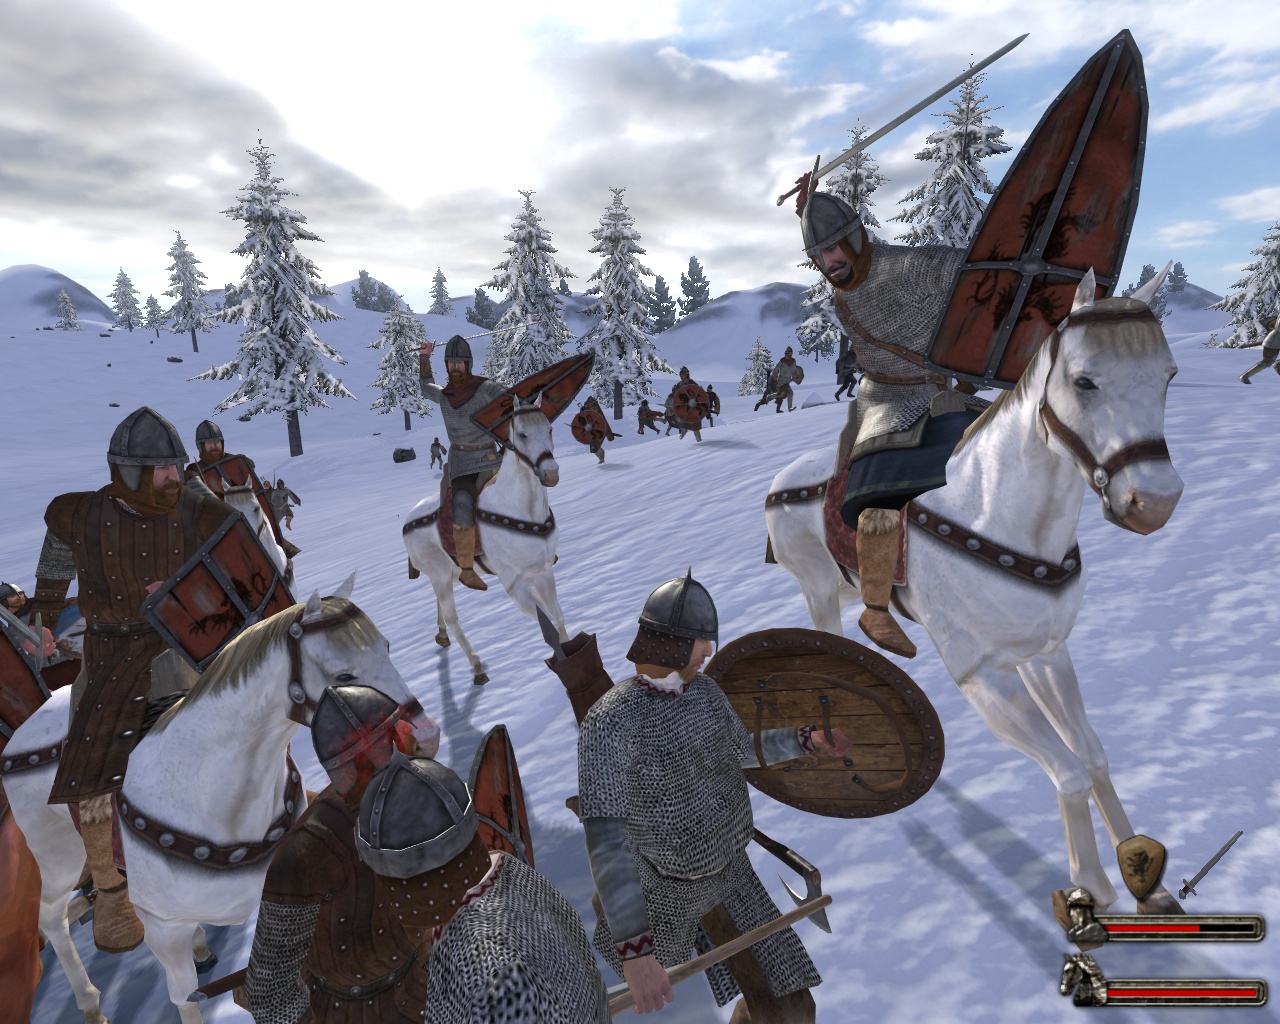 Mount & Blade, Warband, RPG, Game, Medieval, Simulation, Snow, Army, War